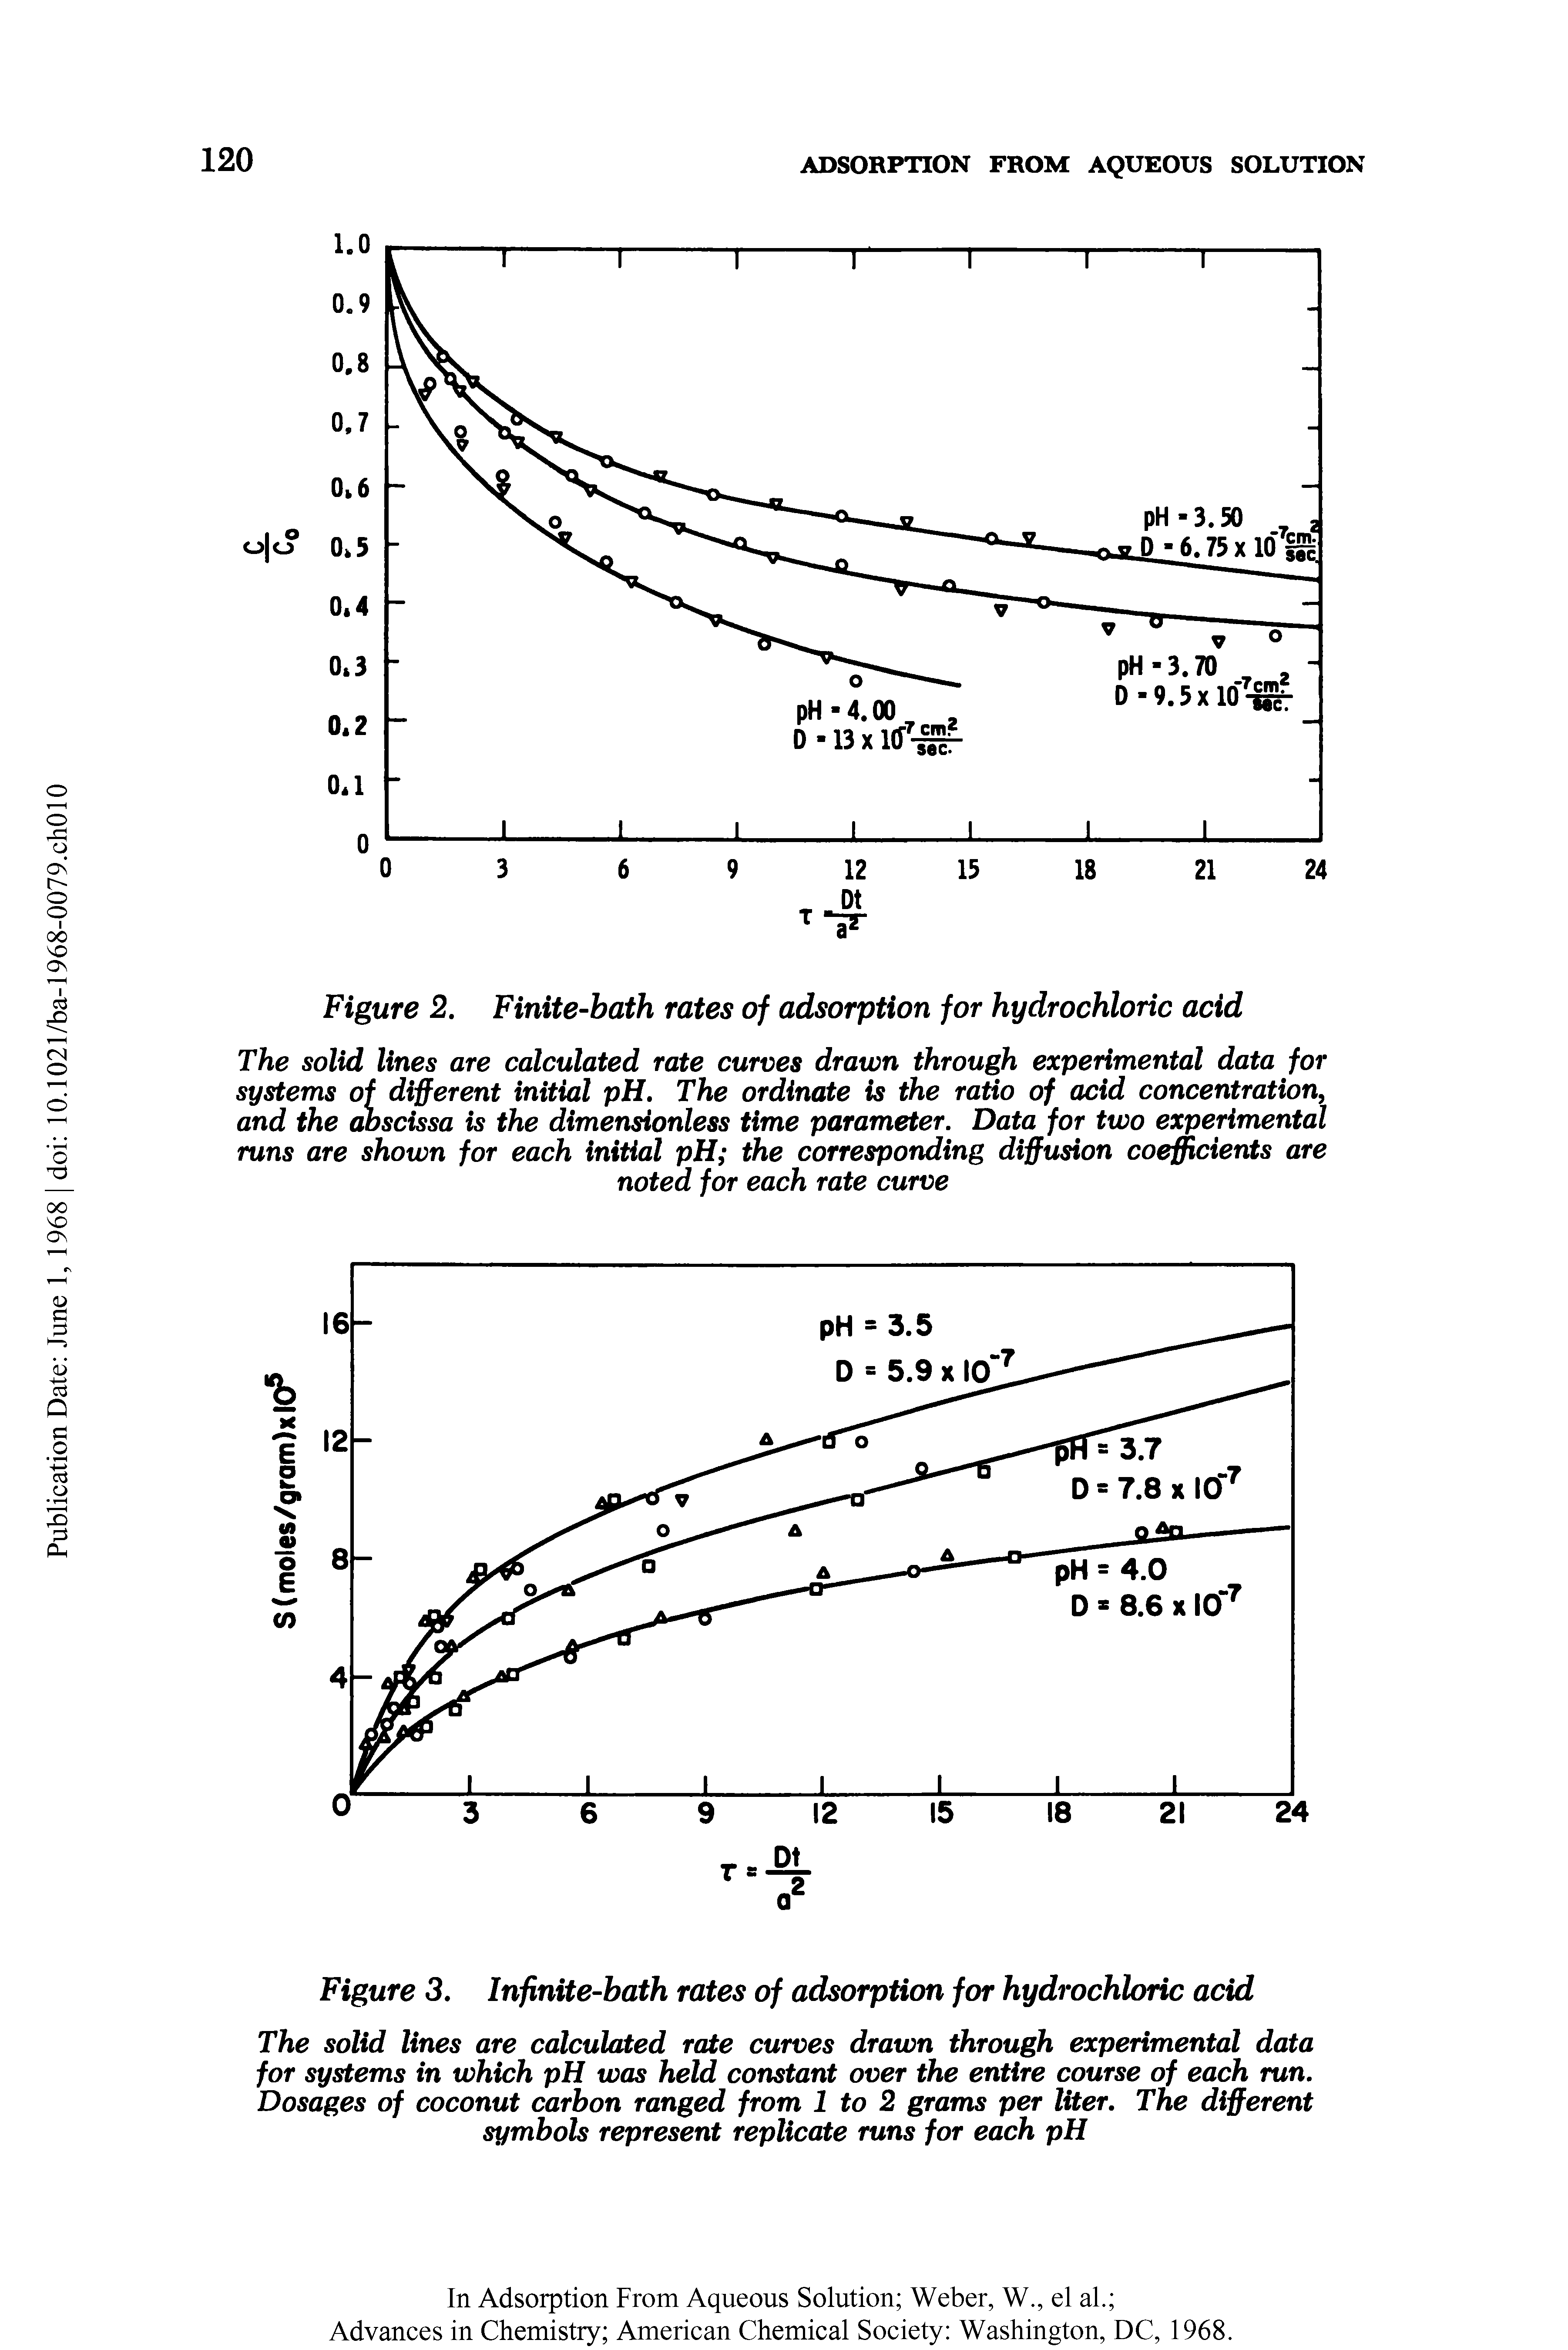 Figure 2. Finite-bath rates of adsorption for hydrochloric acid...